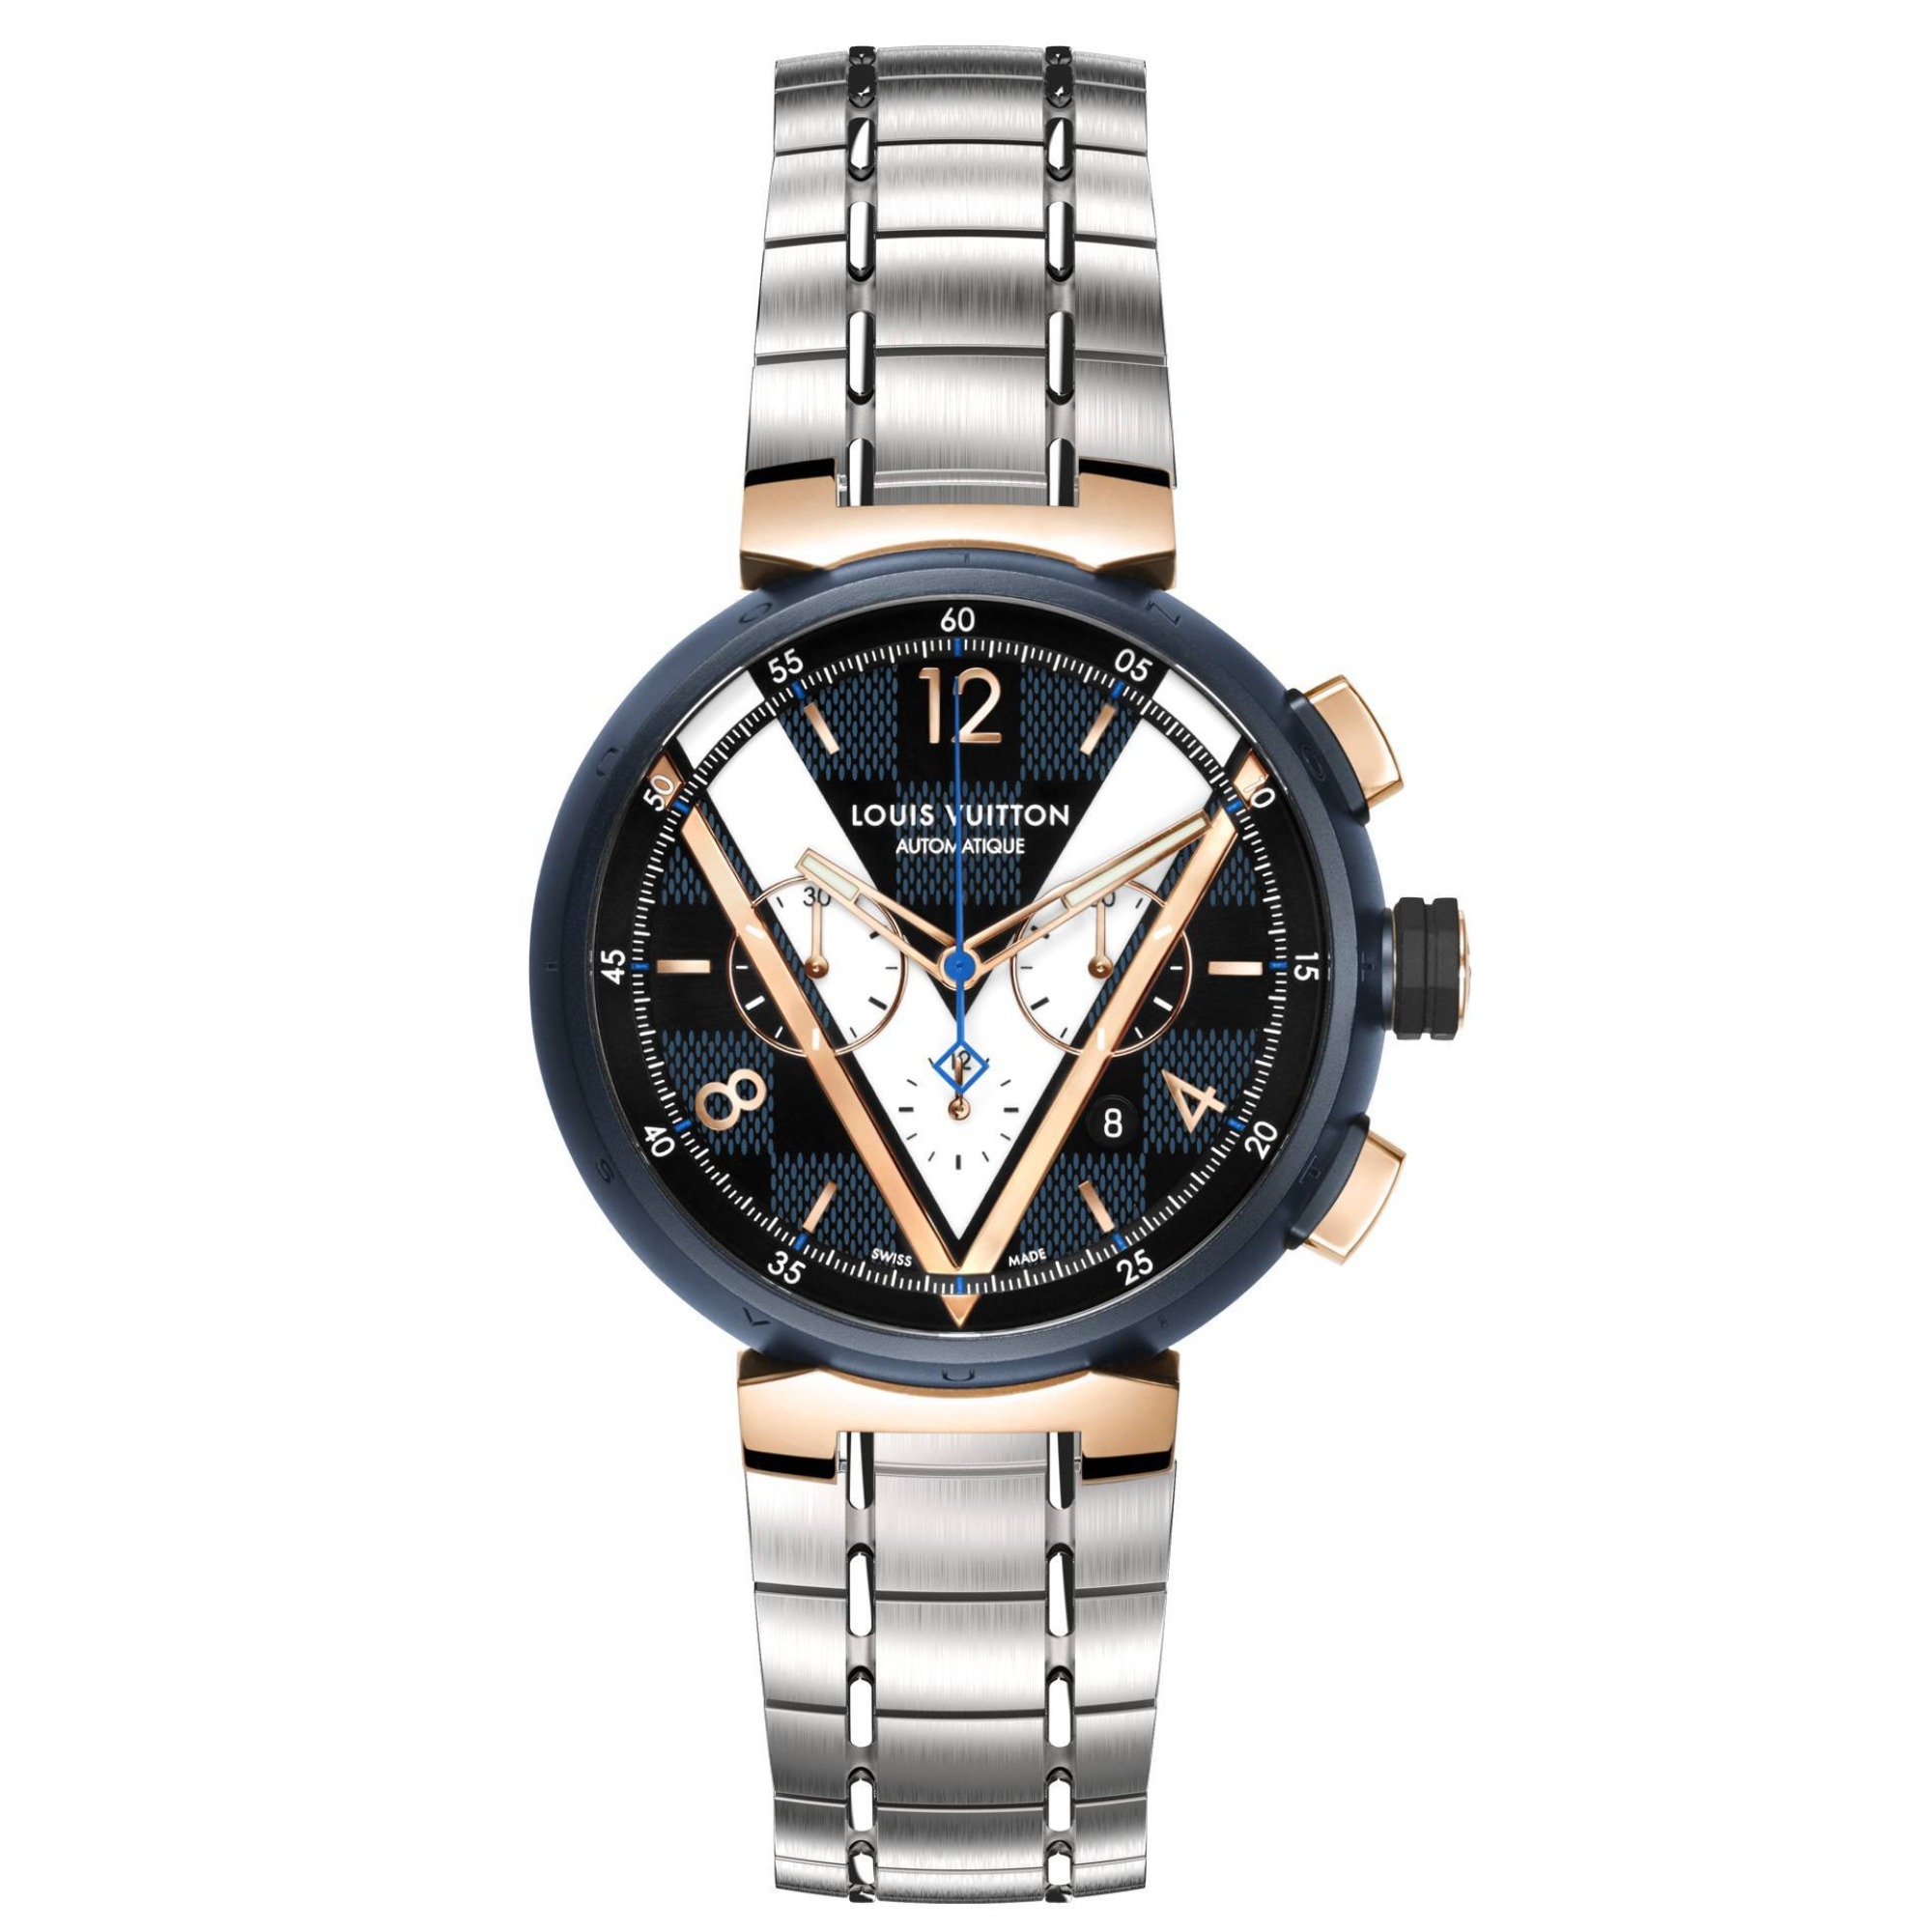 Đồng hồ Louis Vuitton Cup 395 mm  likewatchcom